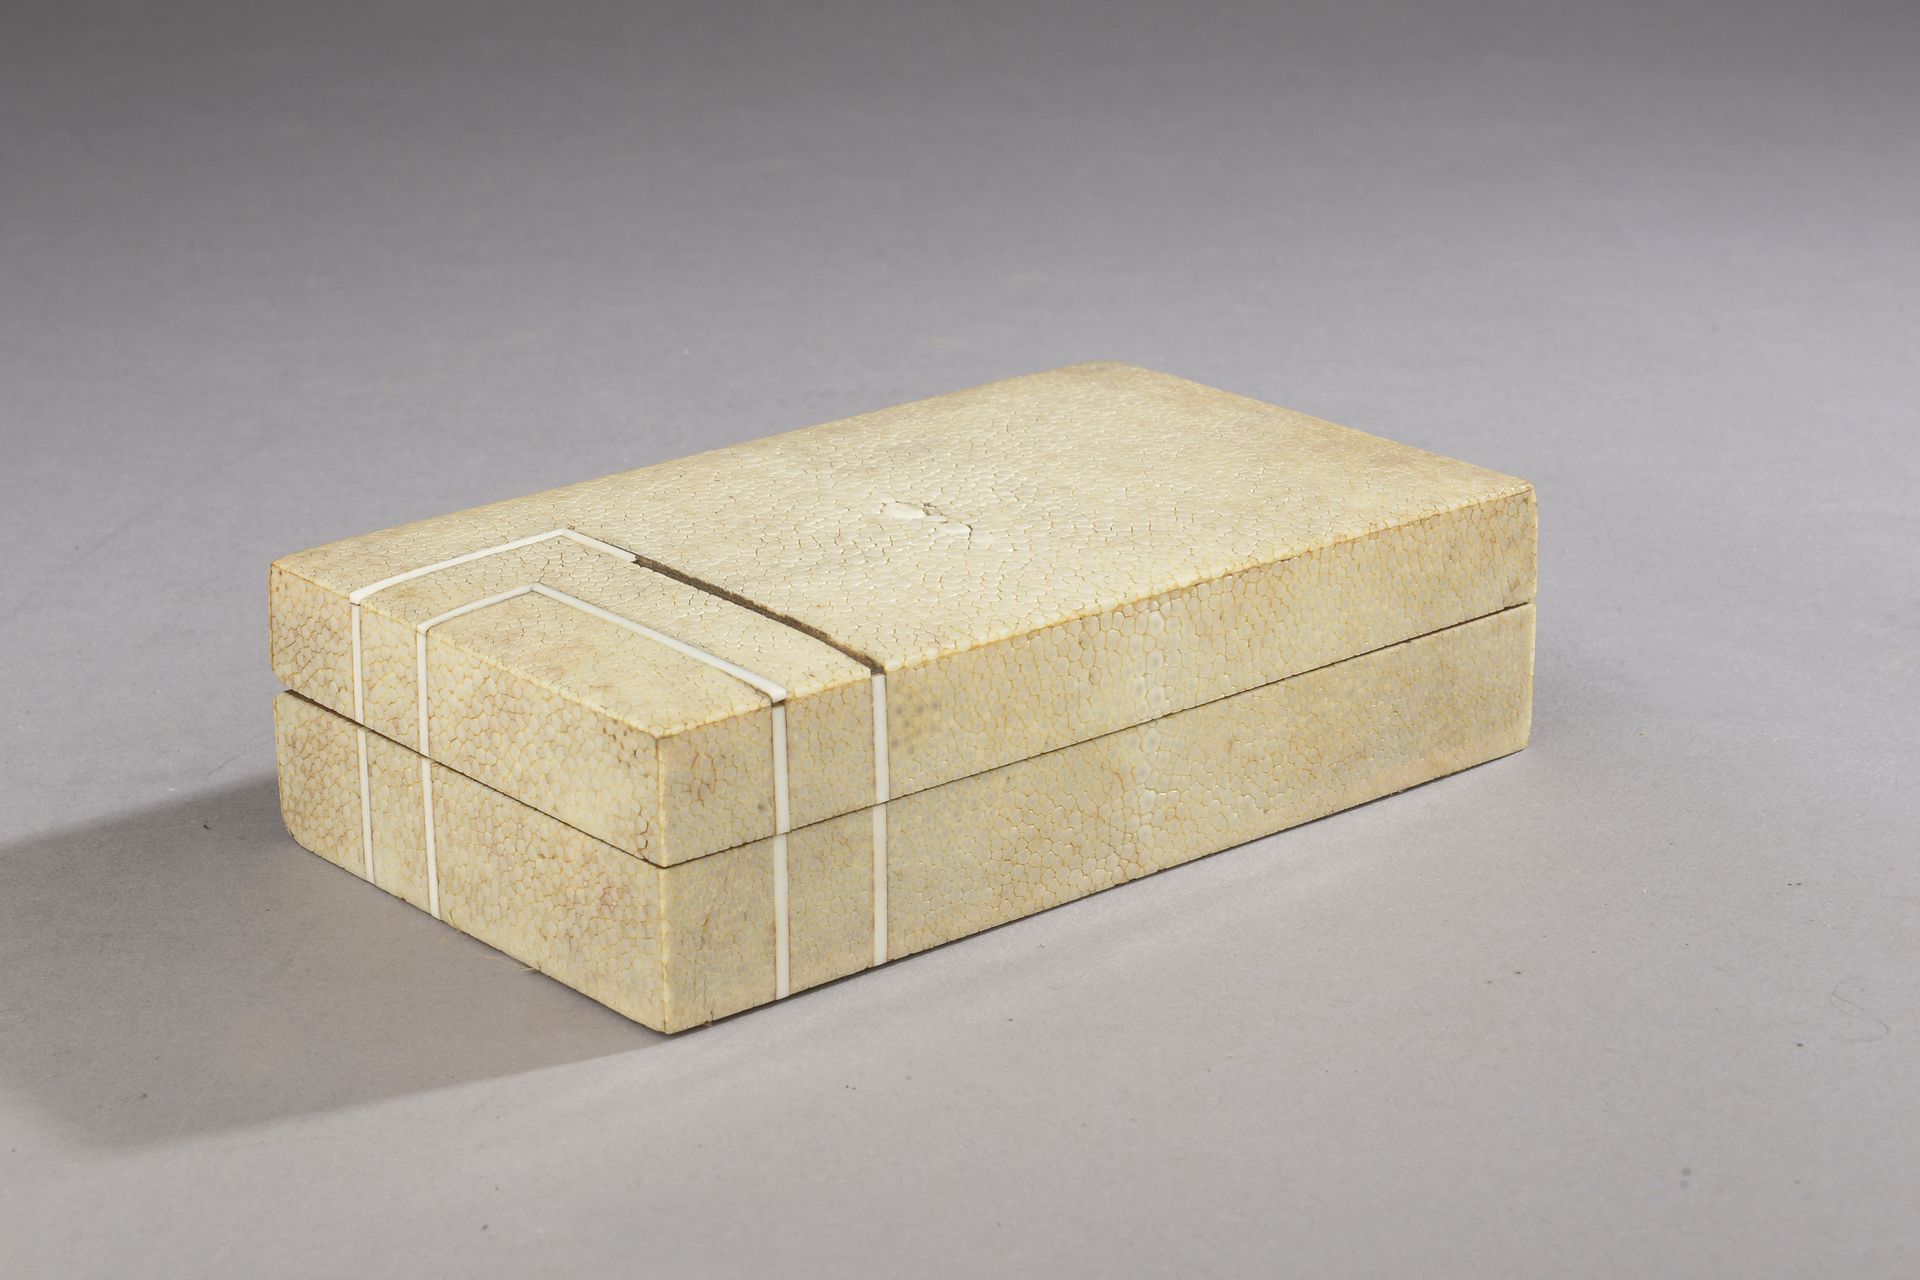 Null 覆盖着黄貂鱼和骨片的烟盒（缺失）。 

装饰艺术时期。 

高度 : 4,6 cm4,6 cm - 宽度 : 17,3 cm - 深度 : 10,2 &hellip;